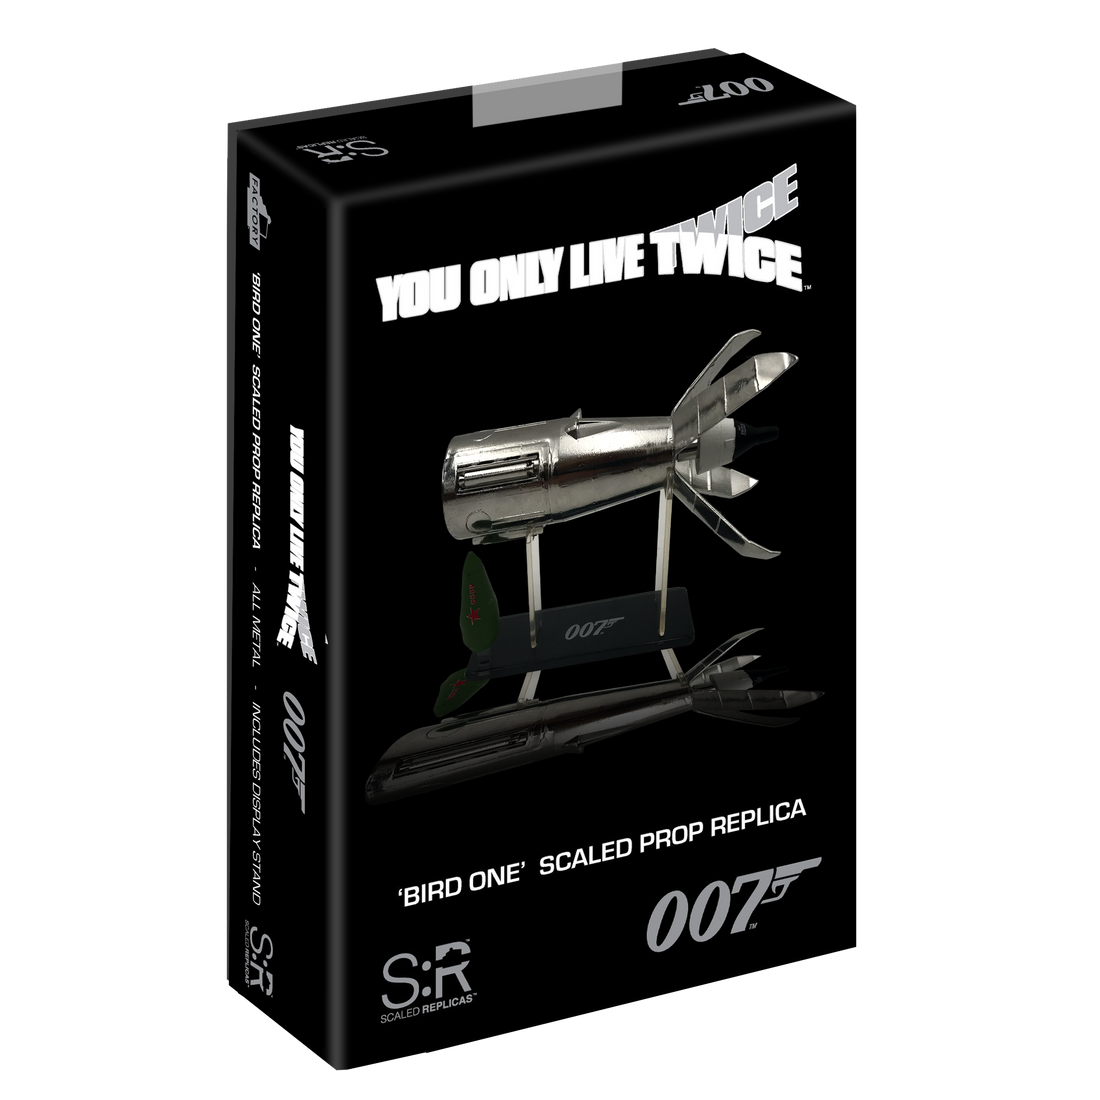 James Bond | Bird One Scaled Prop Replica